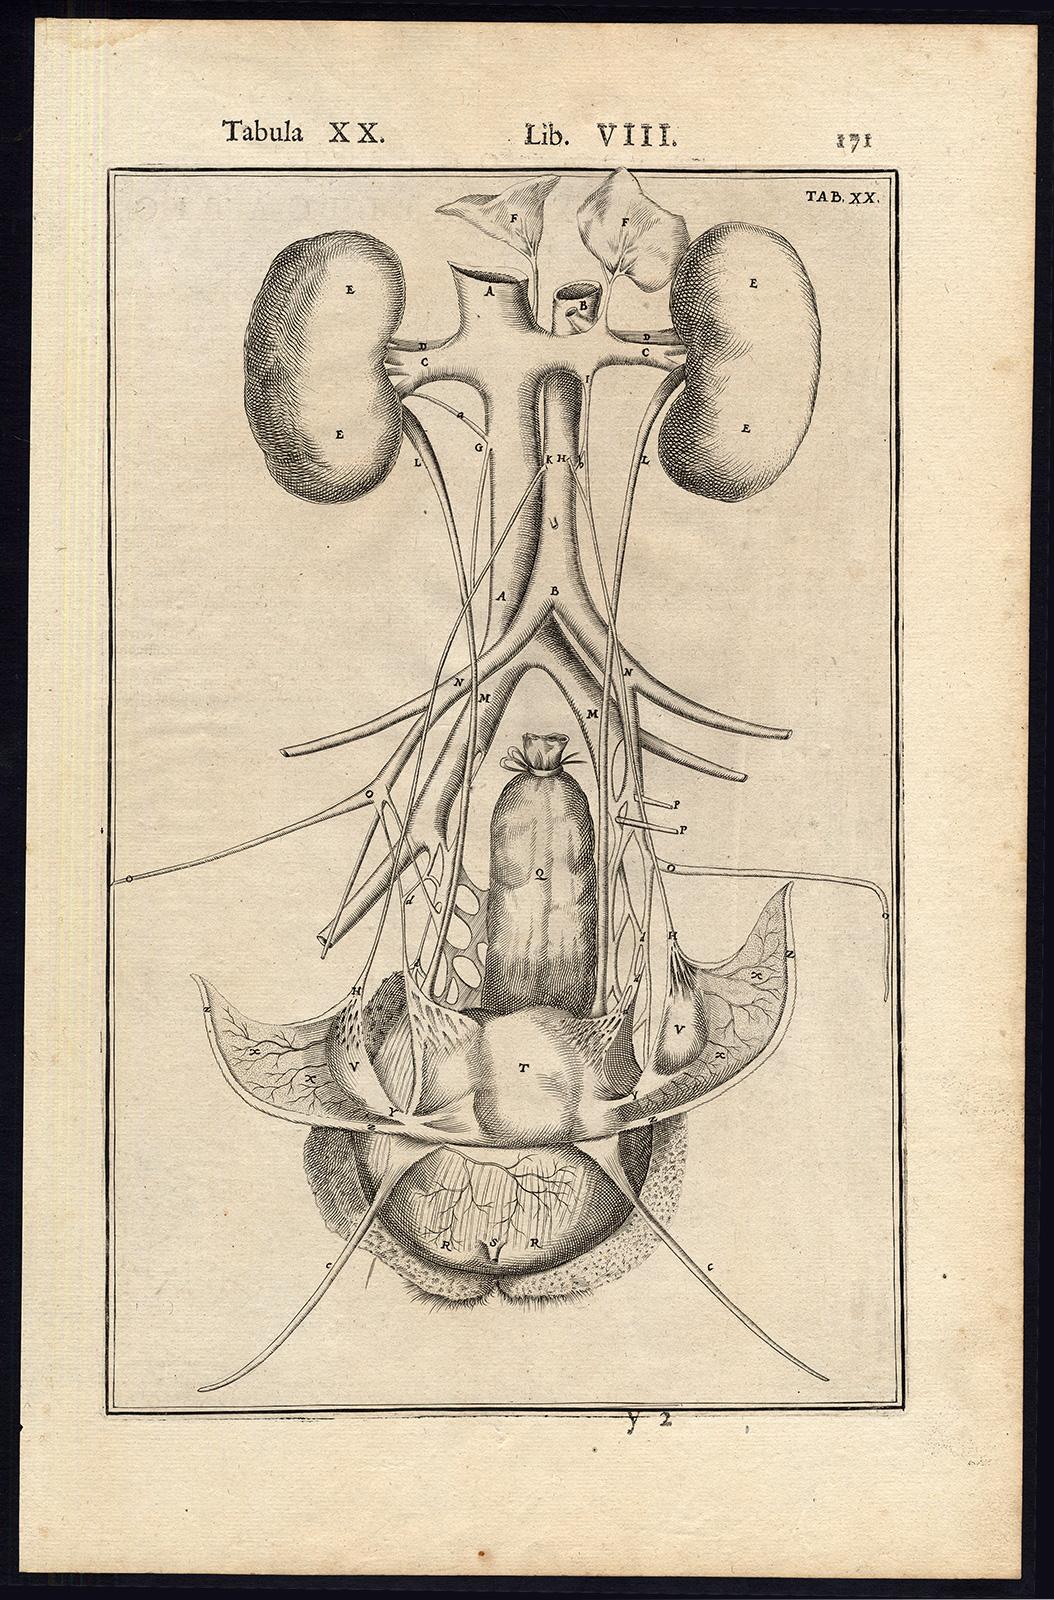 Adrianus Spigelius Print - 2 anatomical prints - Female organs by Spigelius - Engraving - 17th century